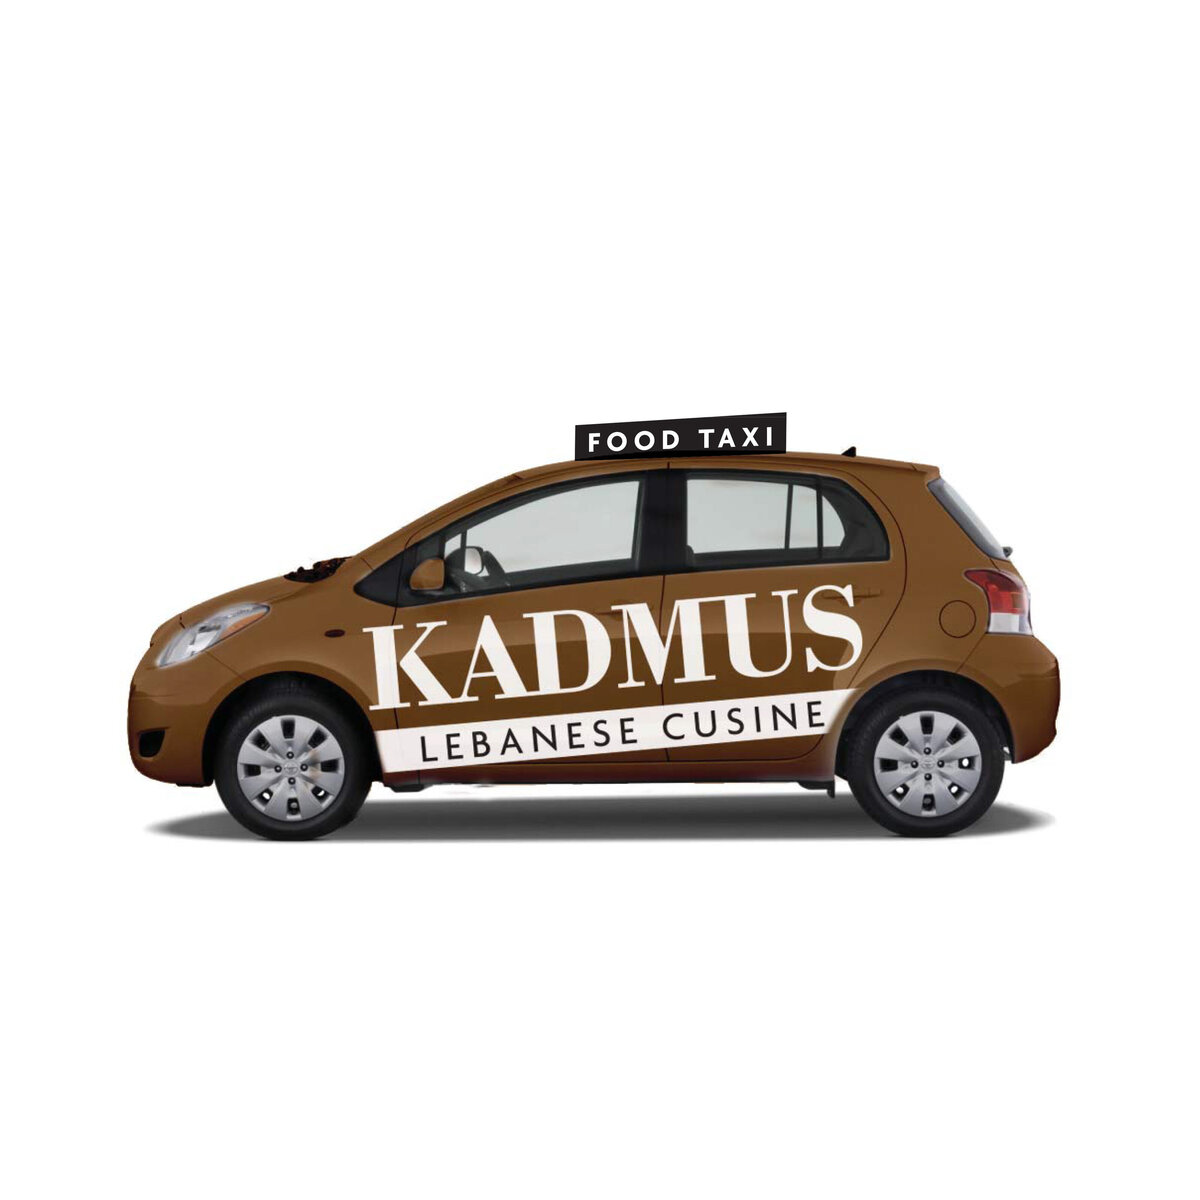 Kadmus (Vehicle Livery)